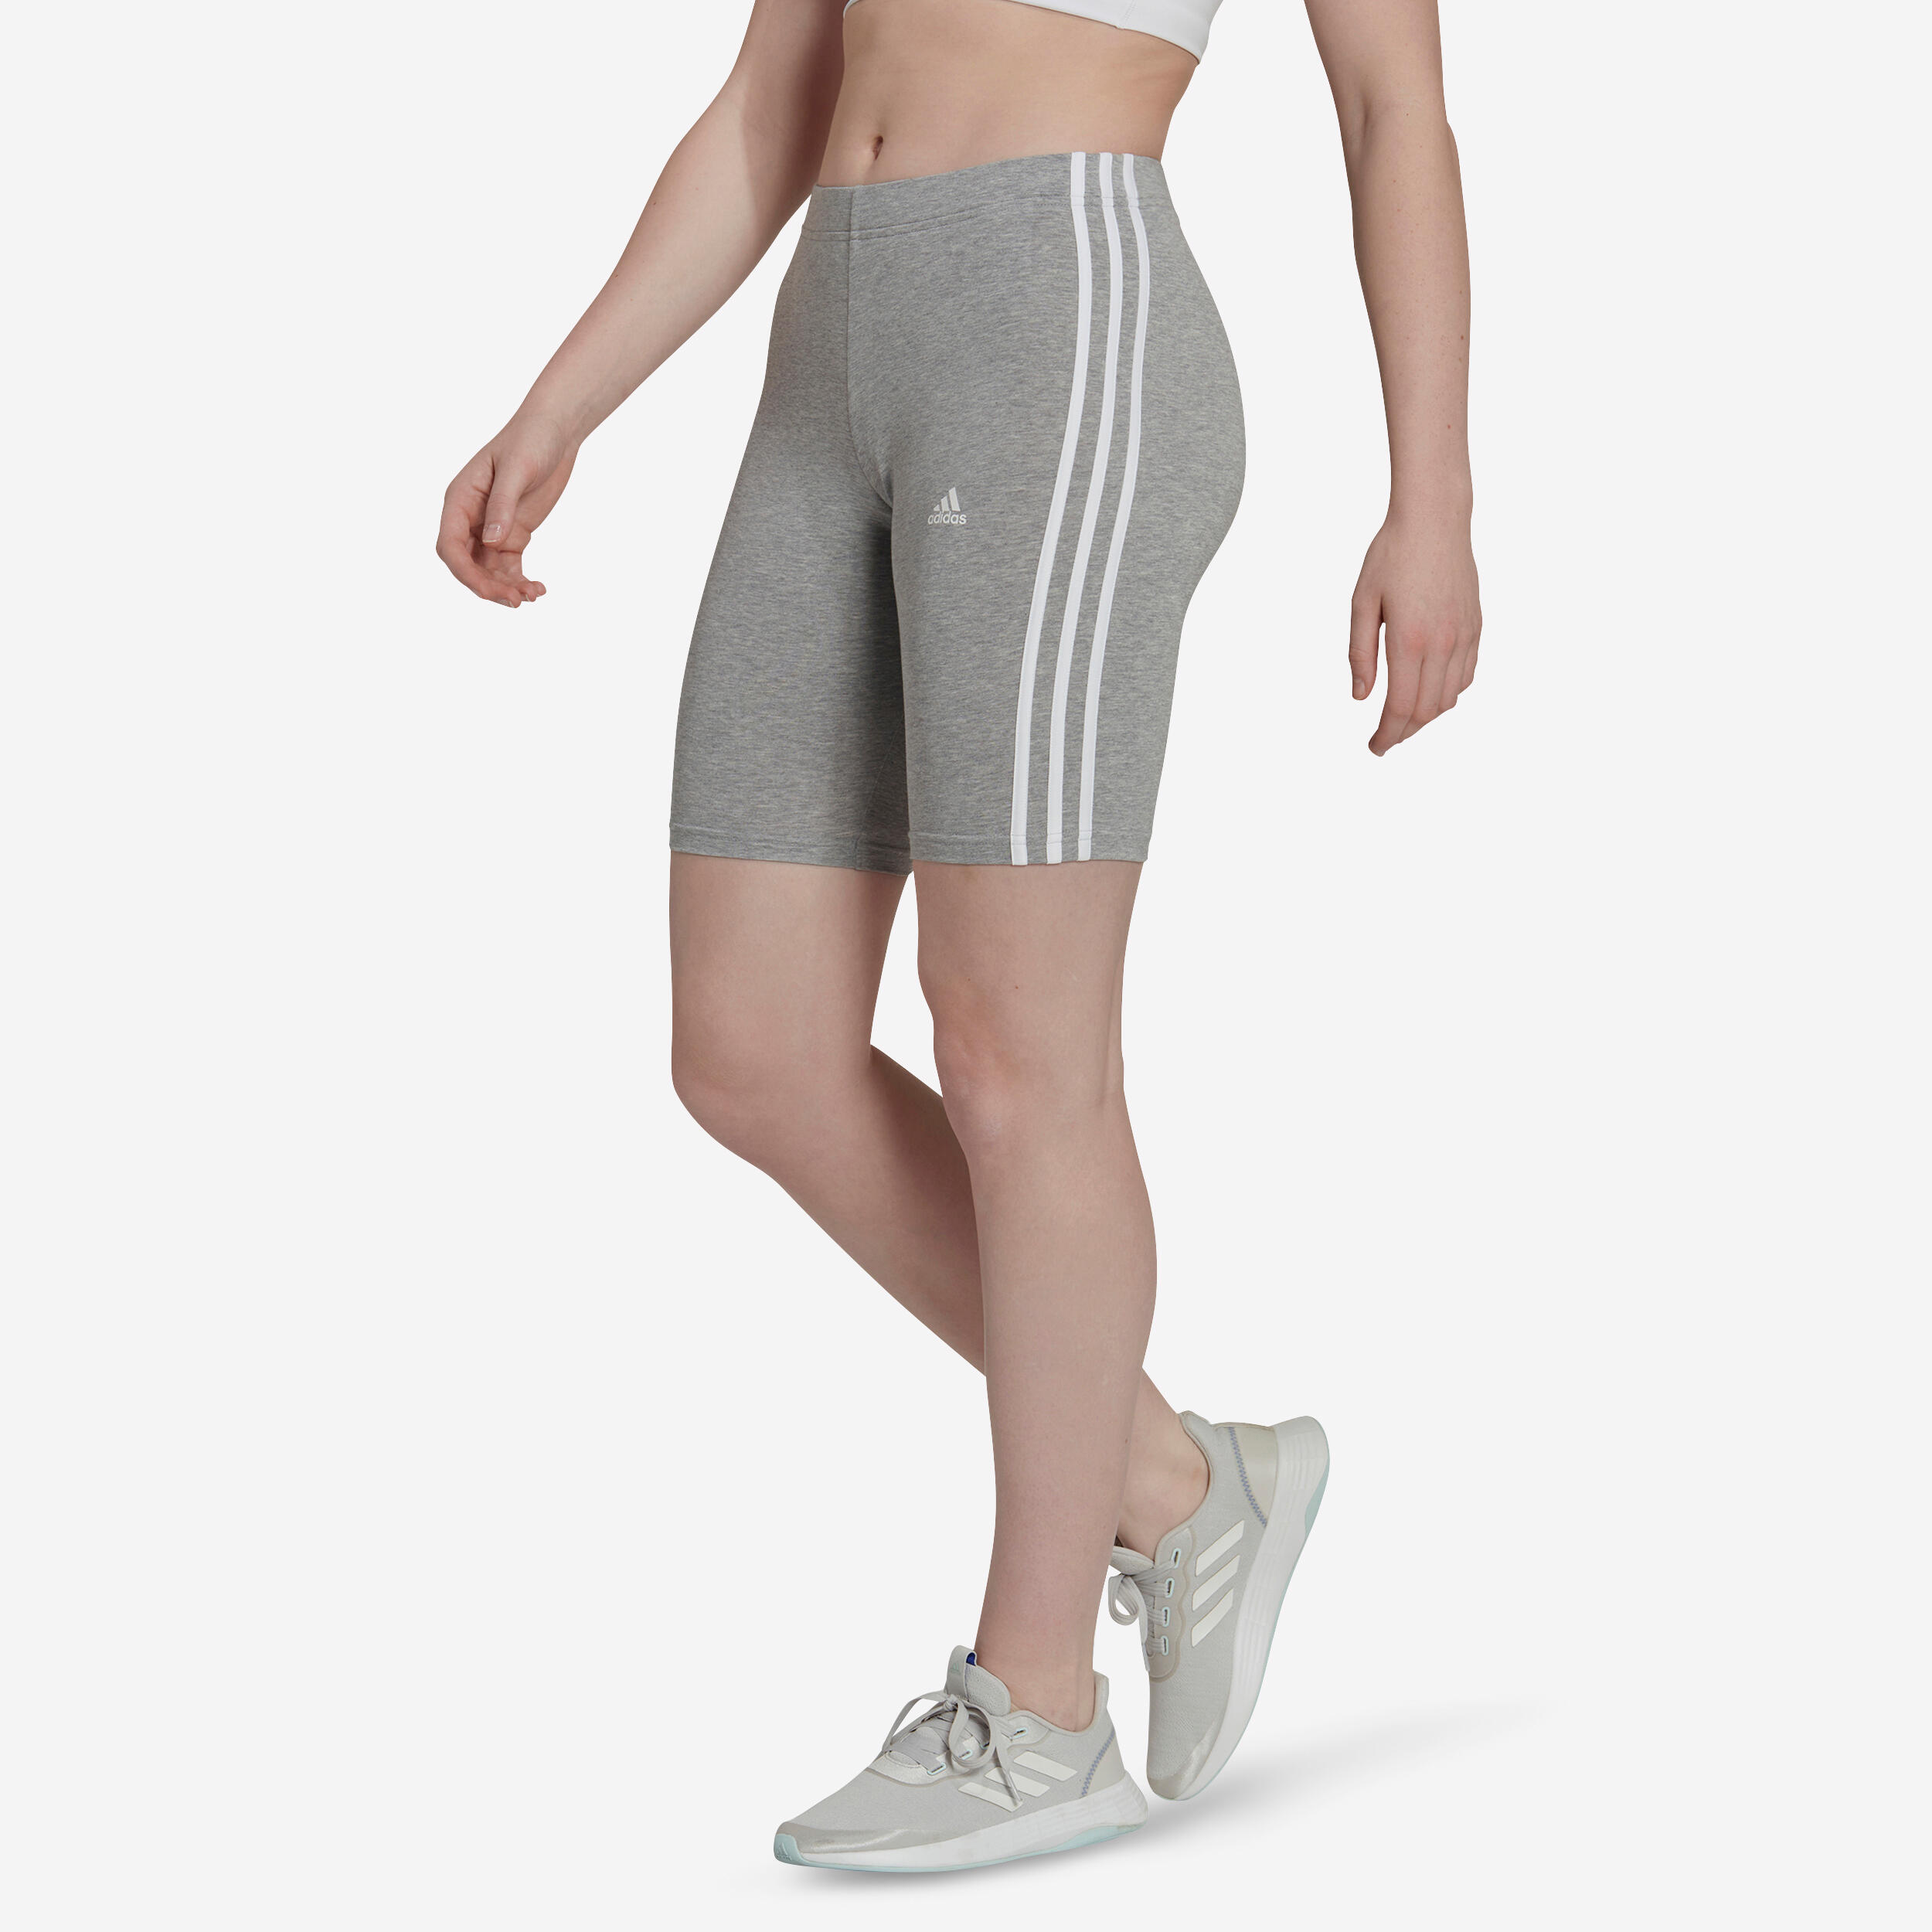 Decathlon UK Adidas Women's Fitness Cycling Shorts Essentials - Grey